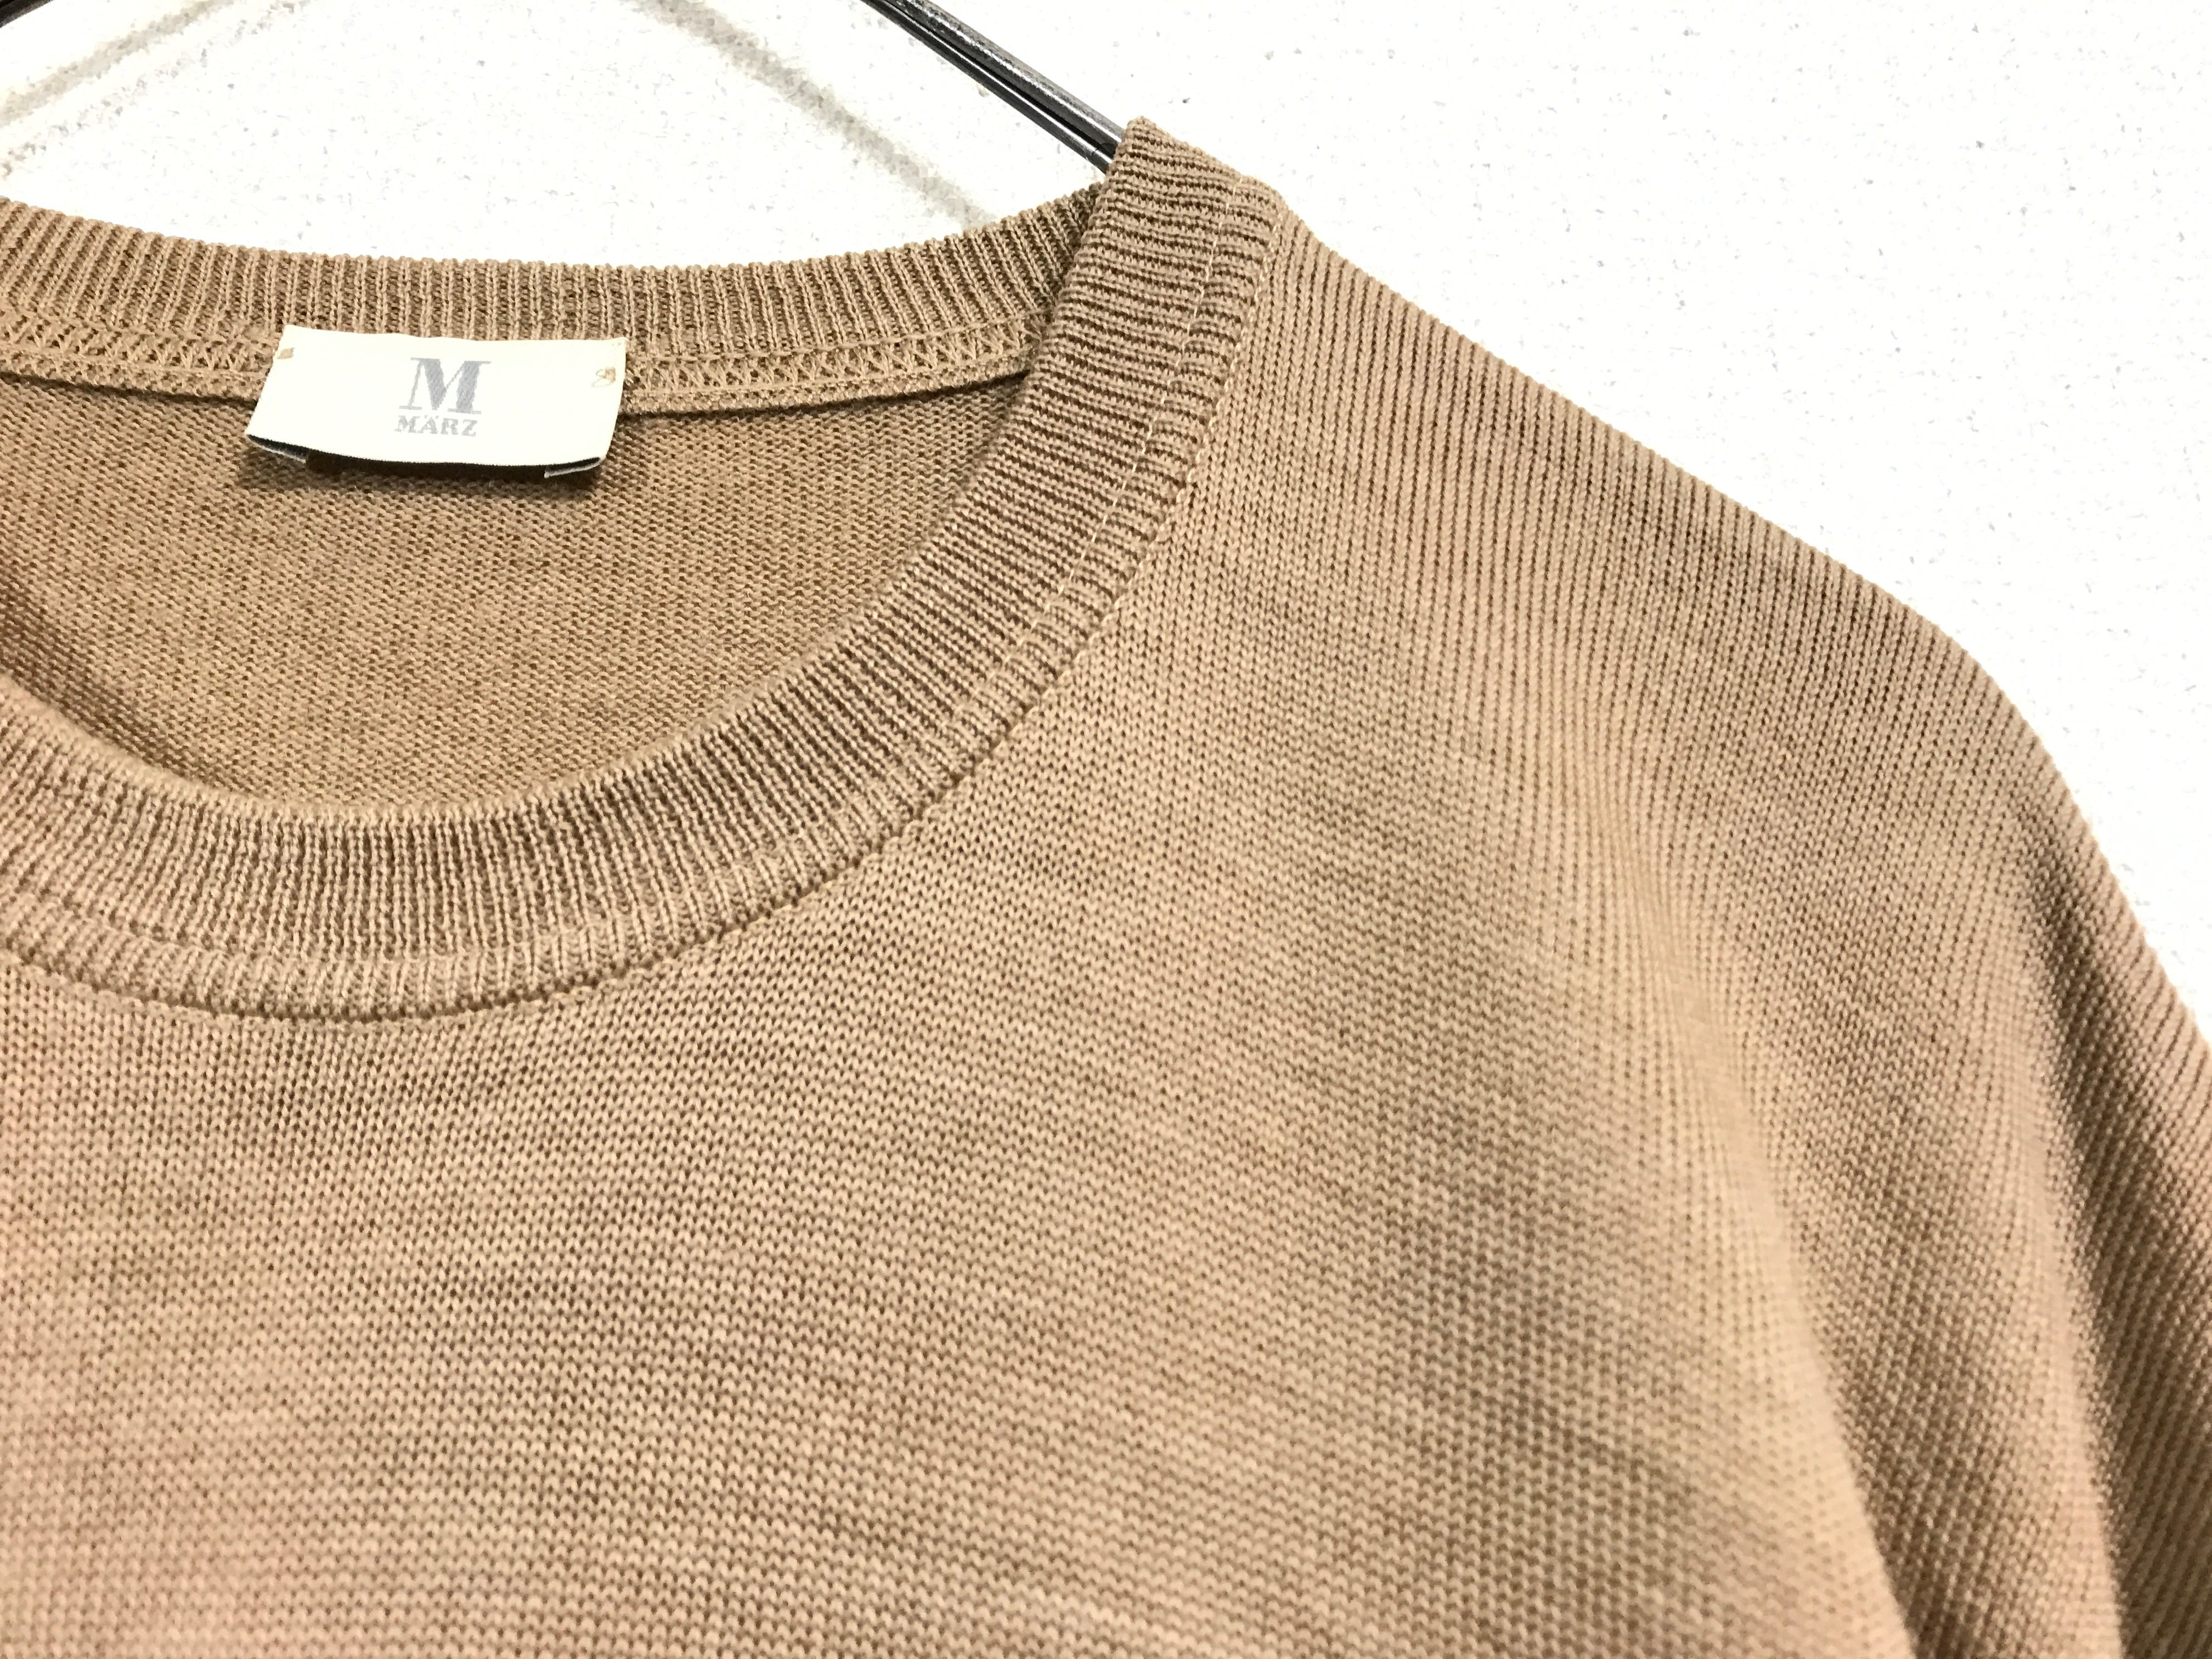 "März" merino wool knit sweater